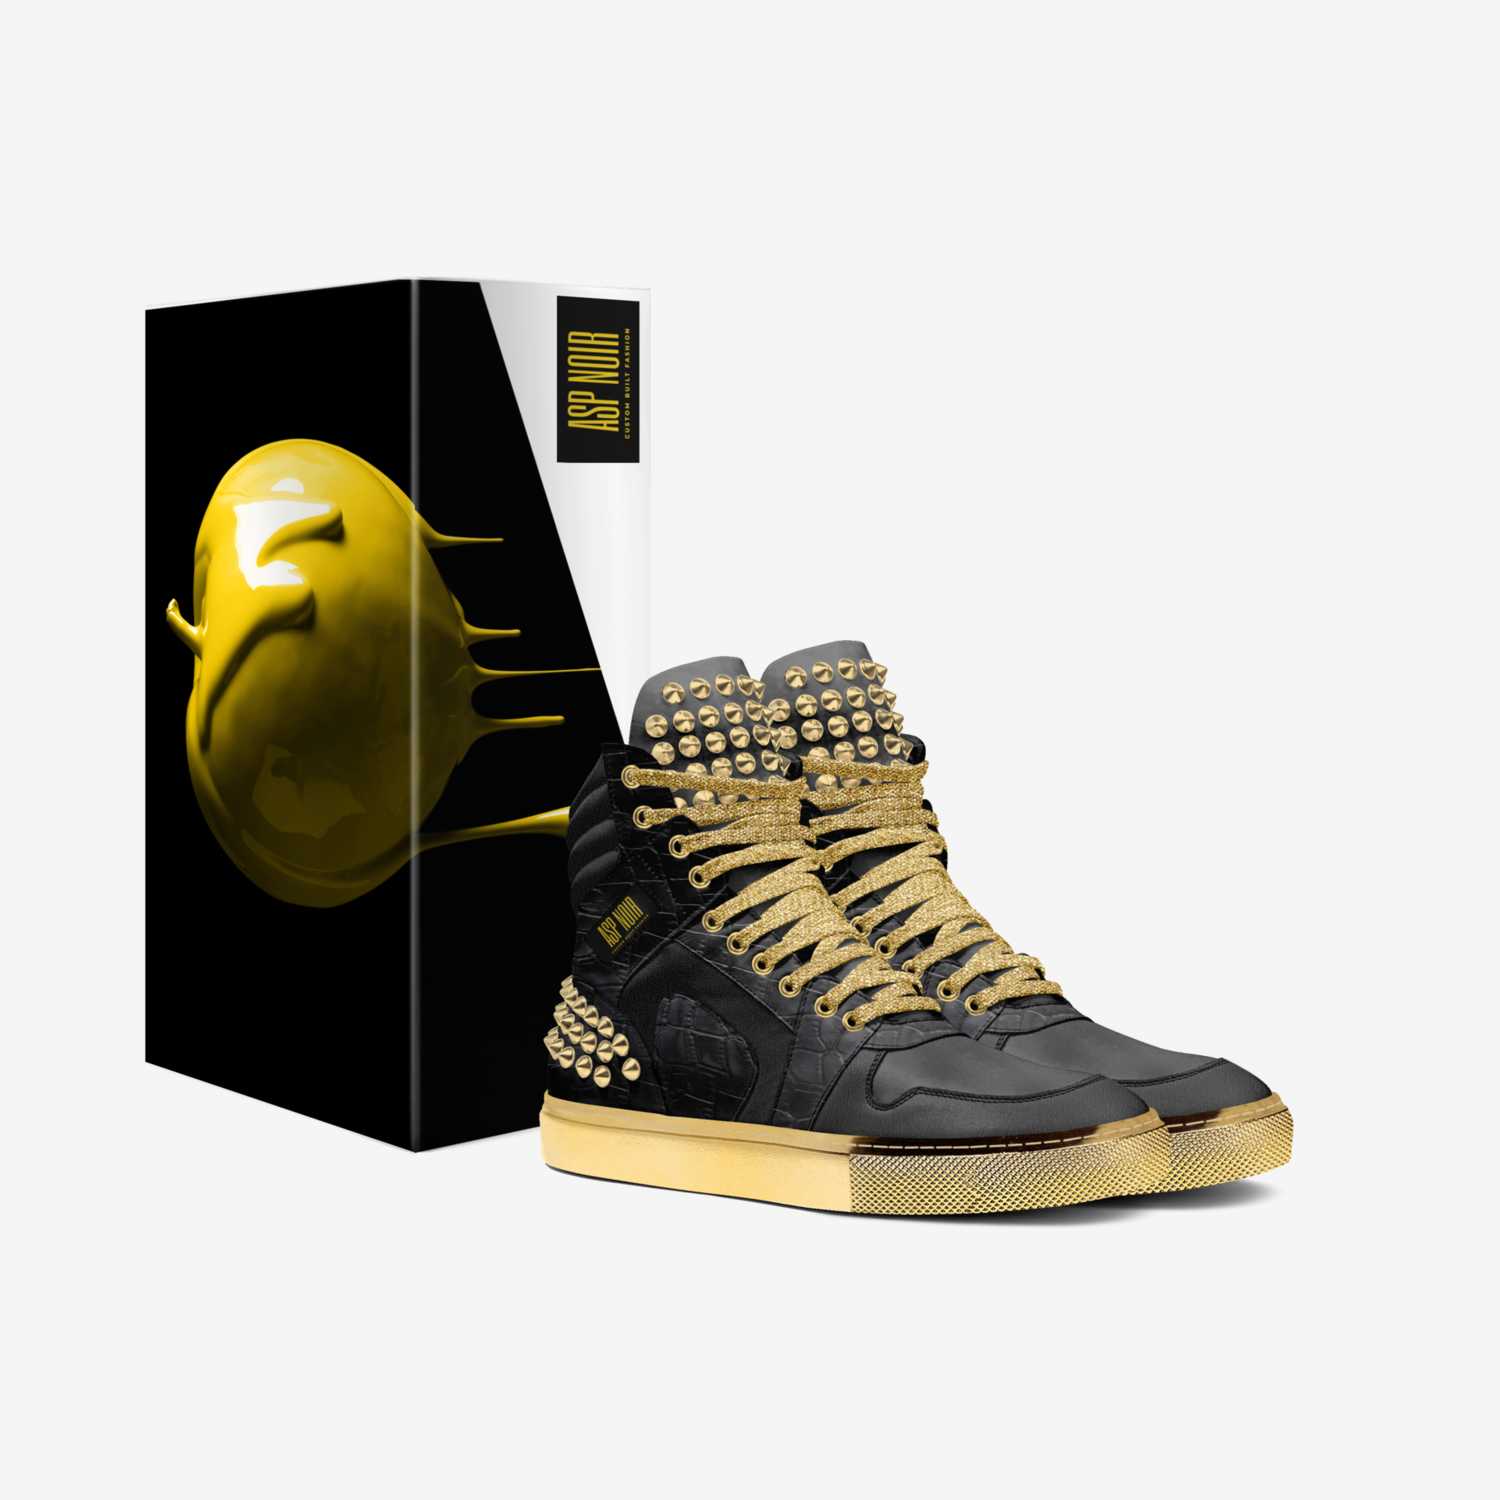 ASP Noir custom made in Italy shoes by Antoaneta Popova | Box view